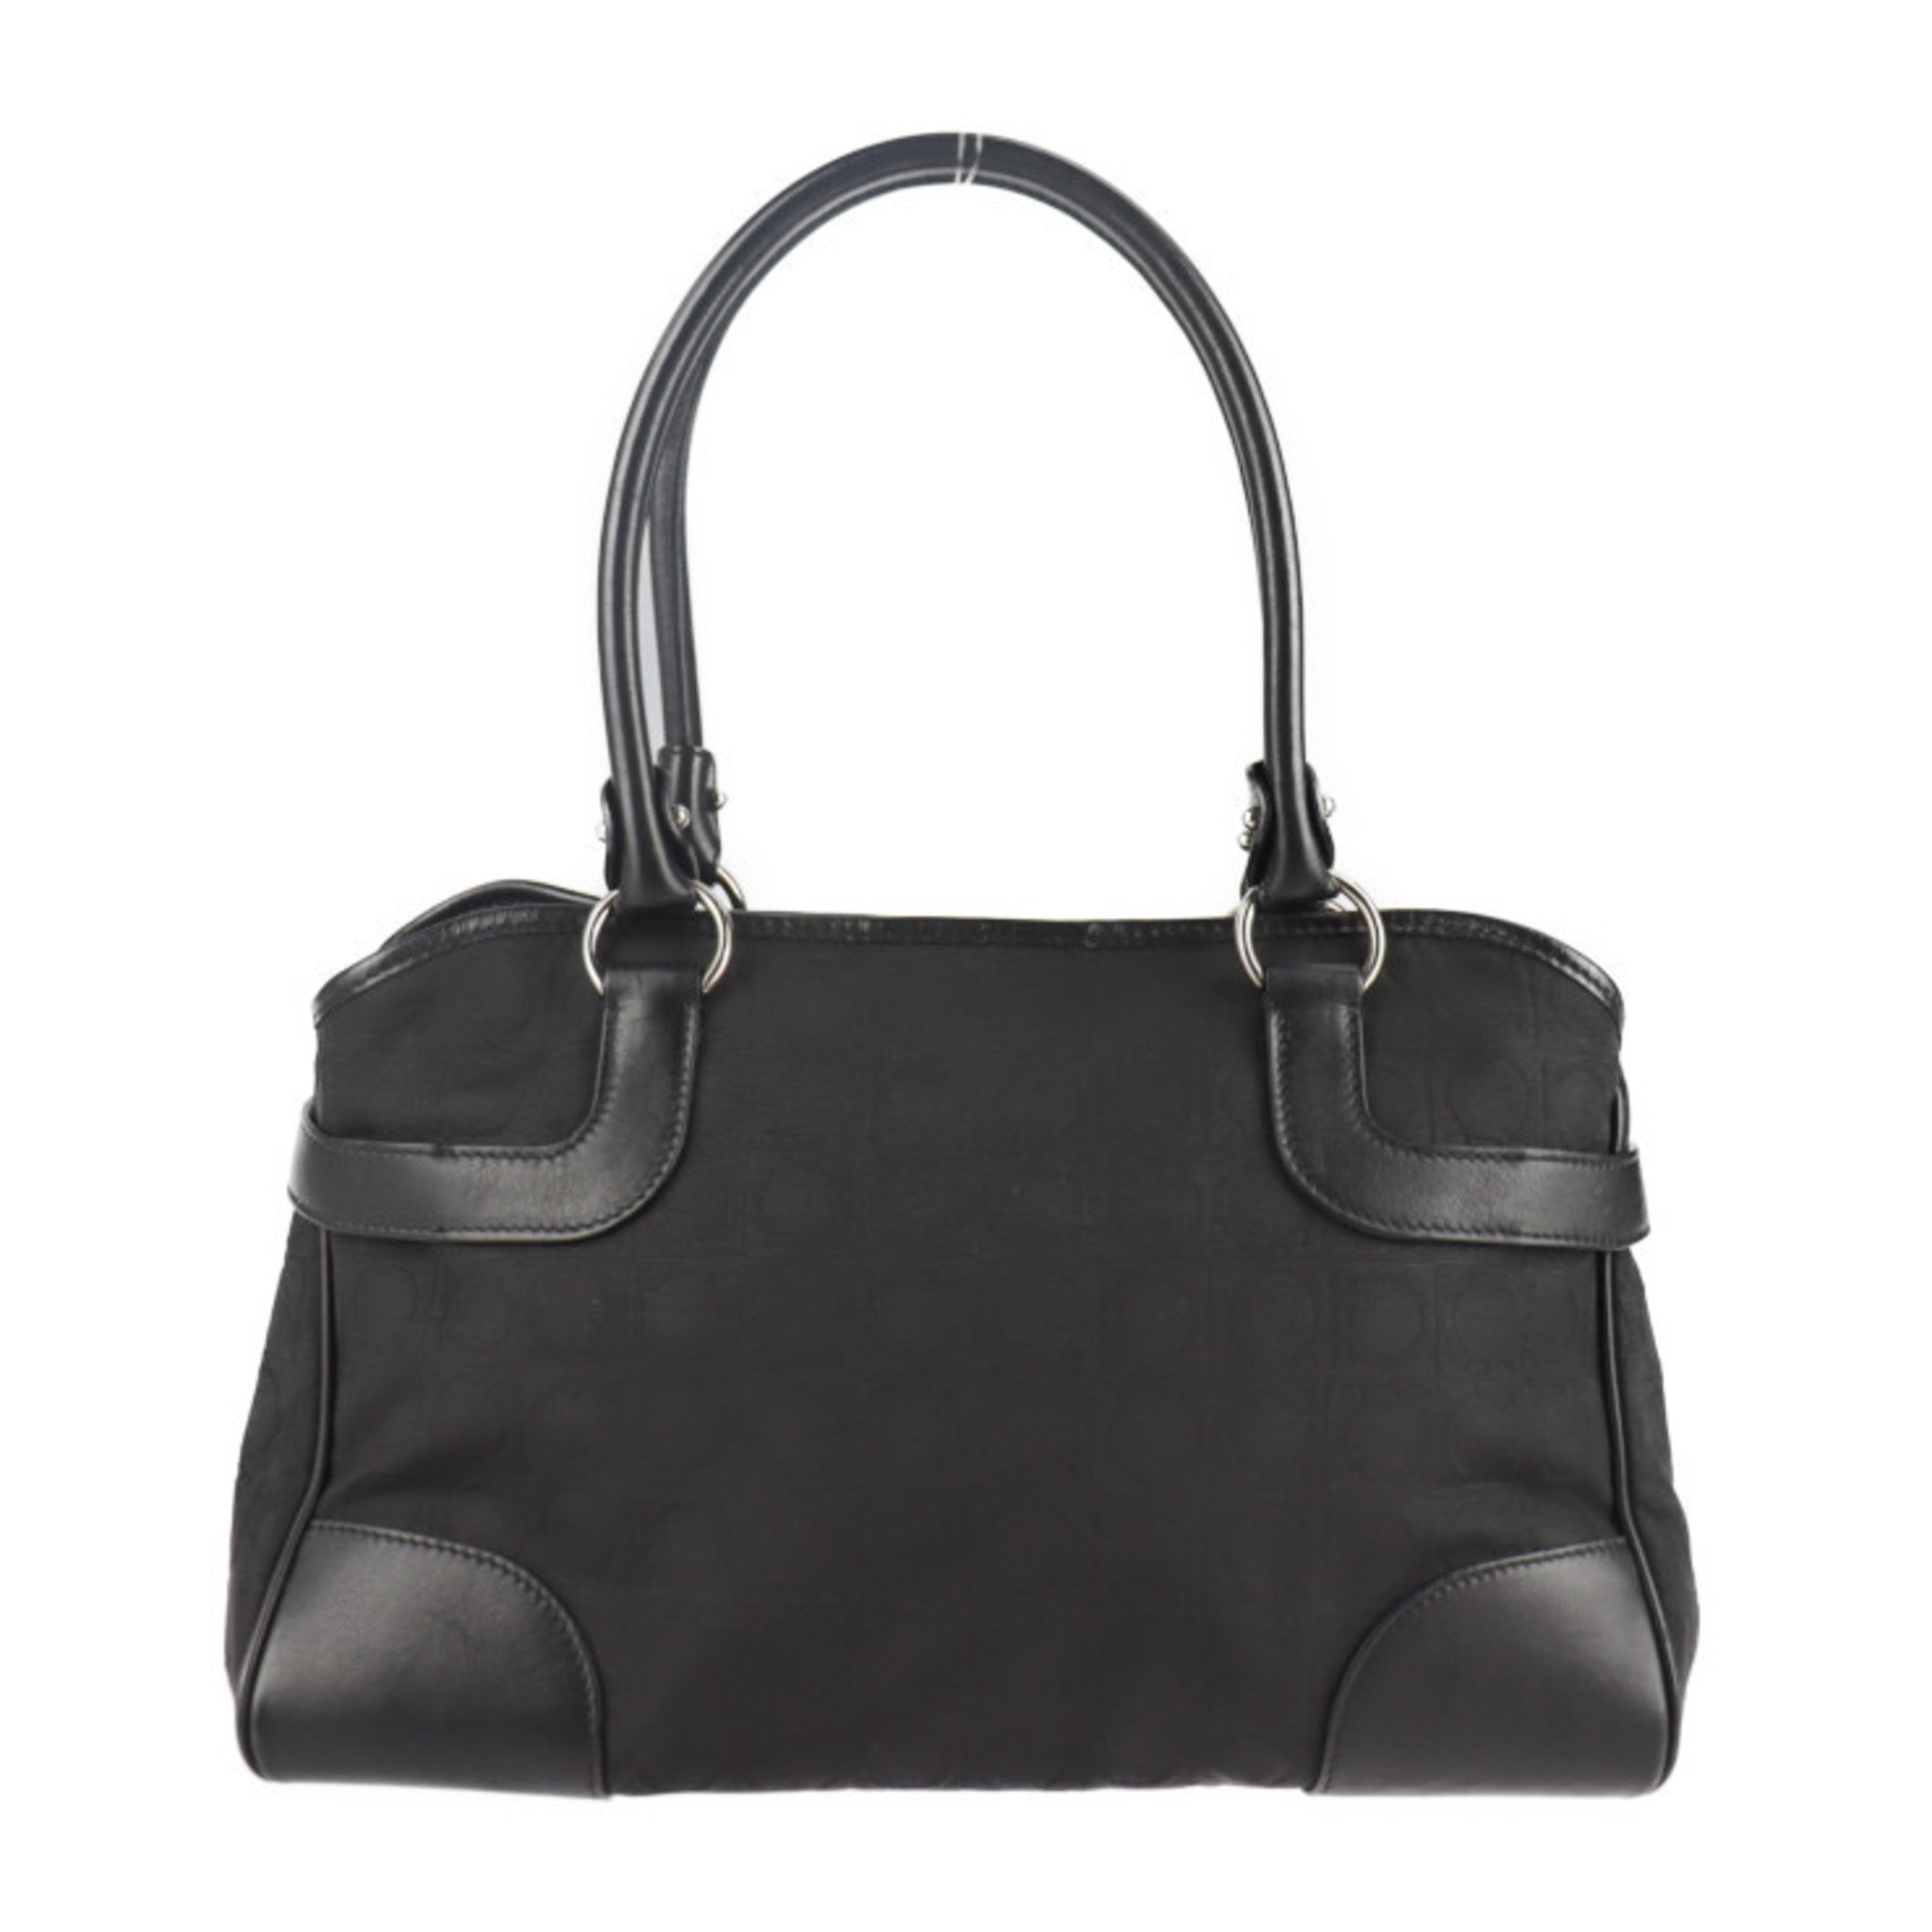 Salvatore Ferragamo Gancini shoulder bag 21 4911 canvas leather black silver hardware handbag